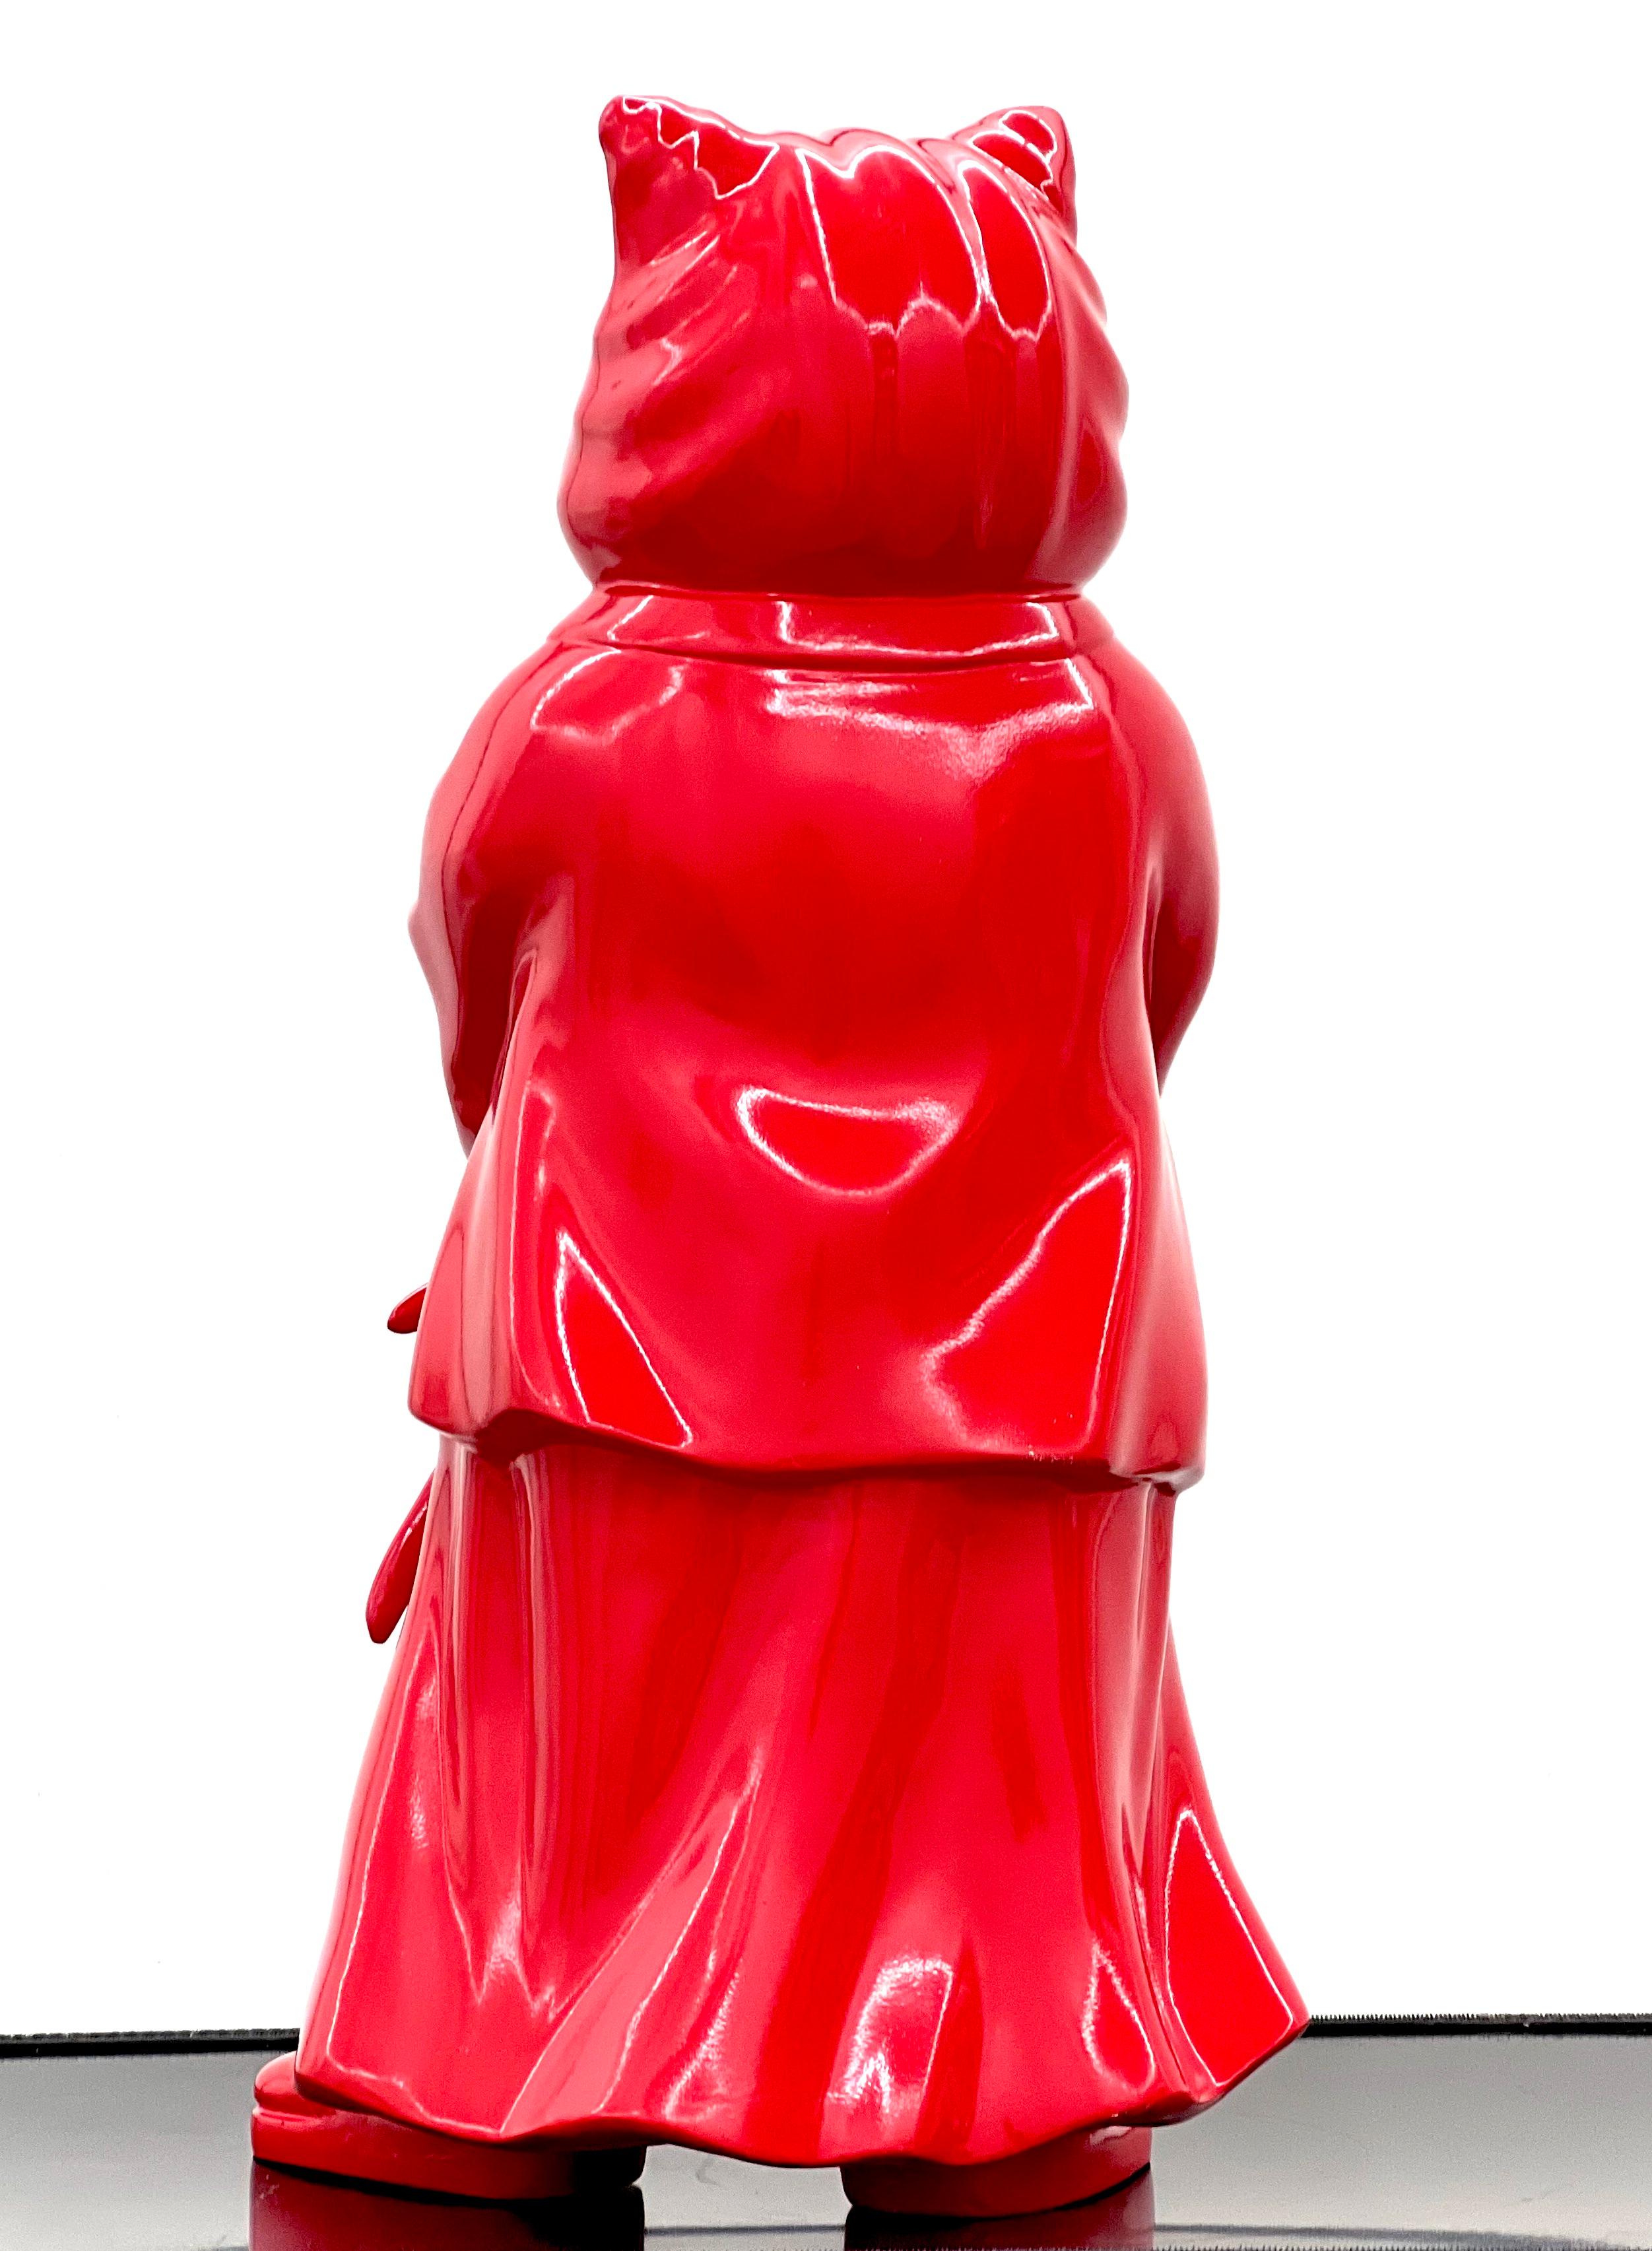 Shoguncat's Noble Stance : Red Regal Vigor - Contemporary Sculpture by HIRO ANDO